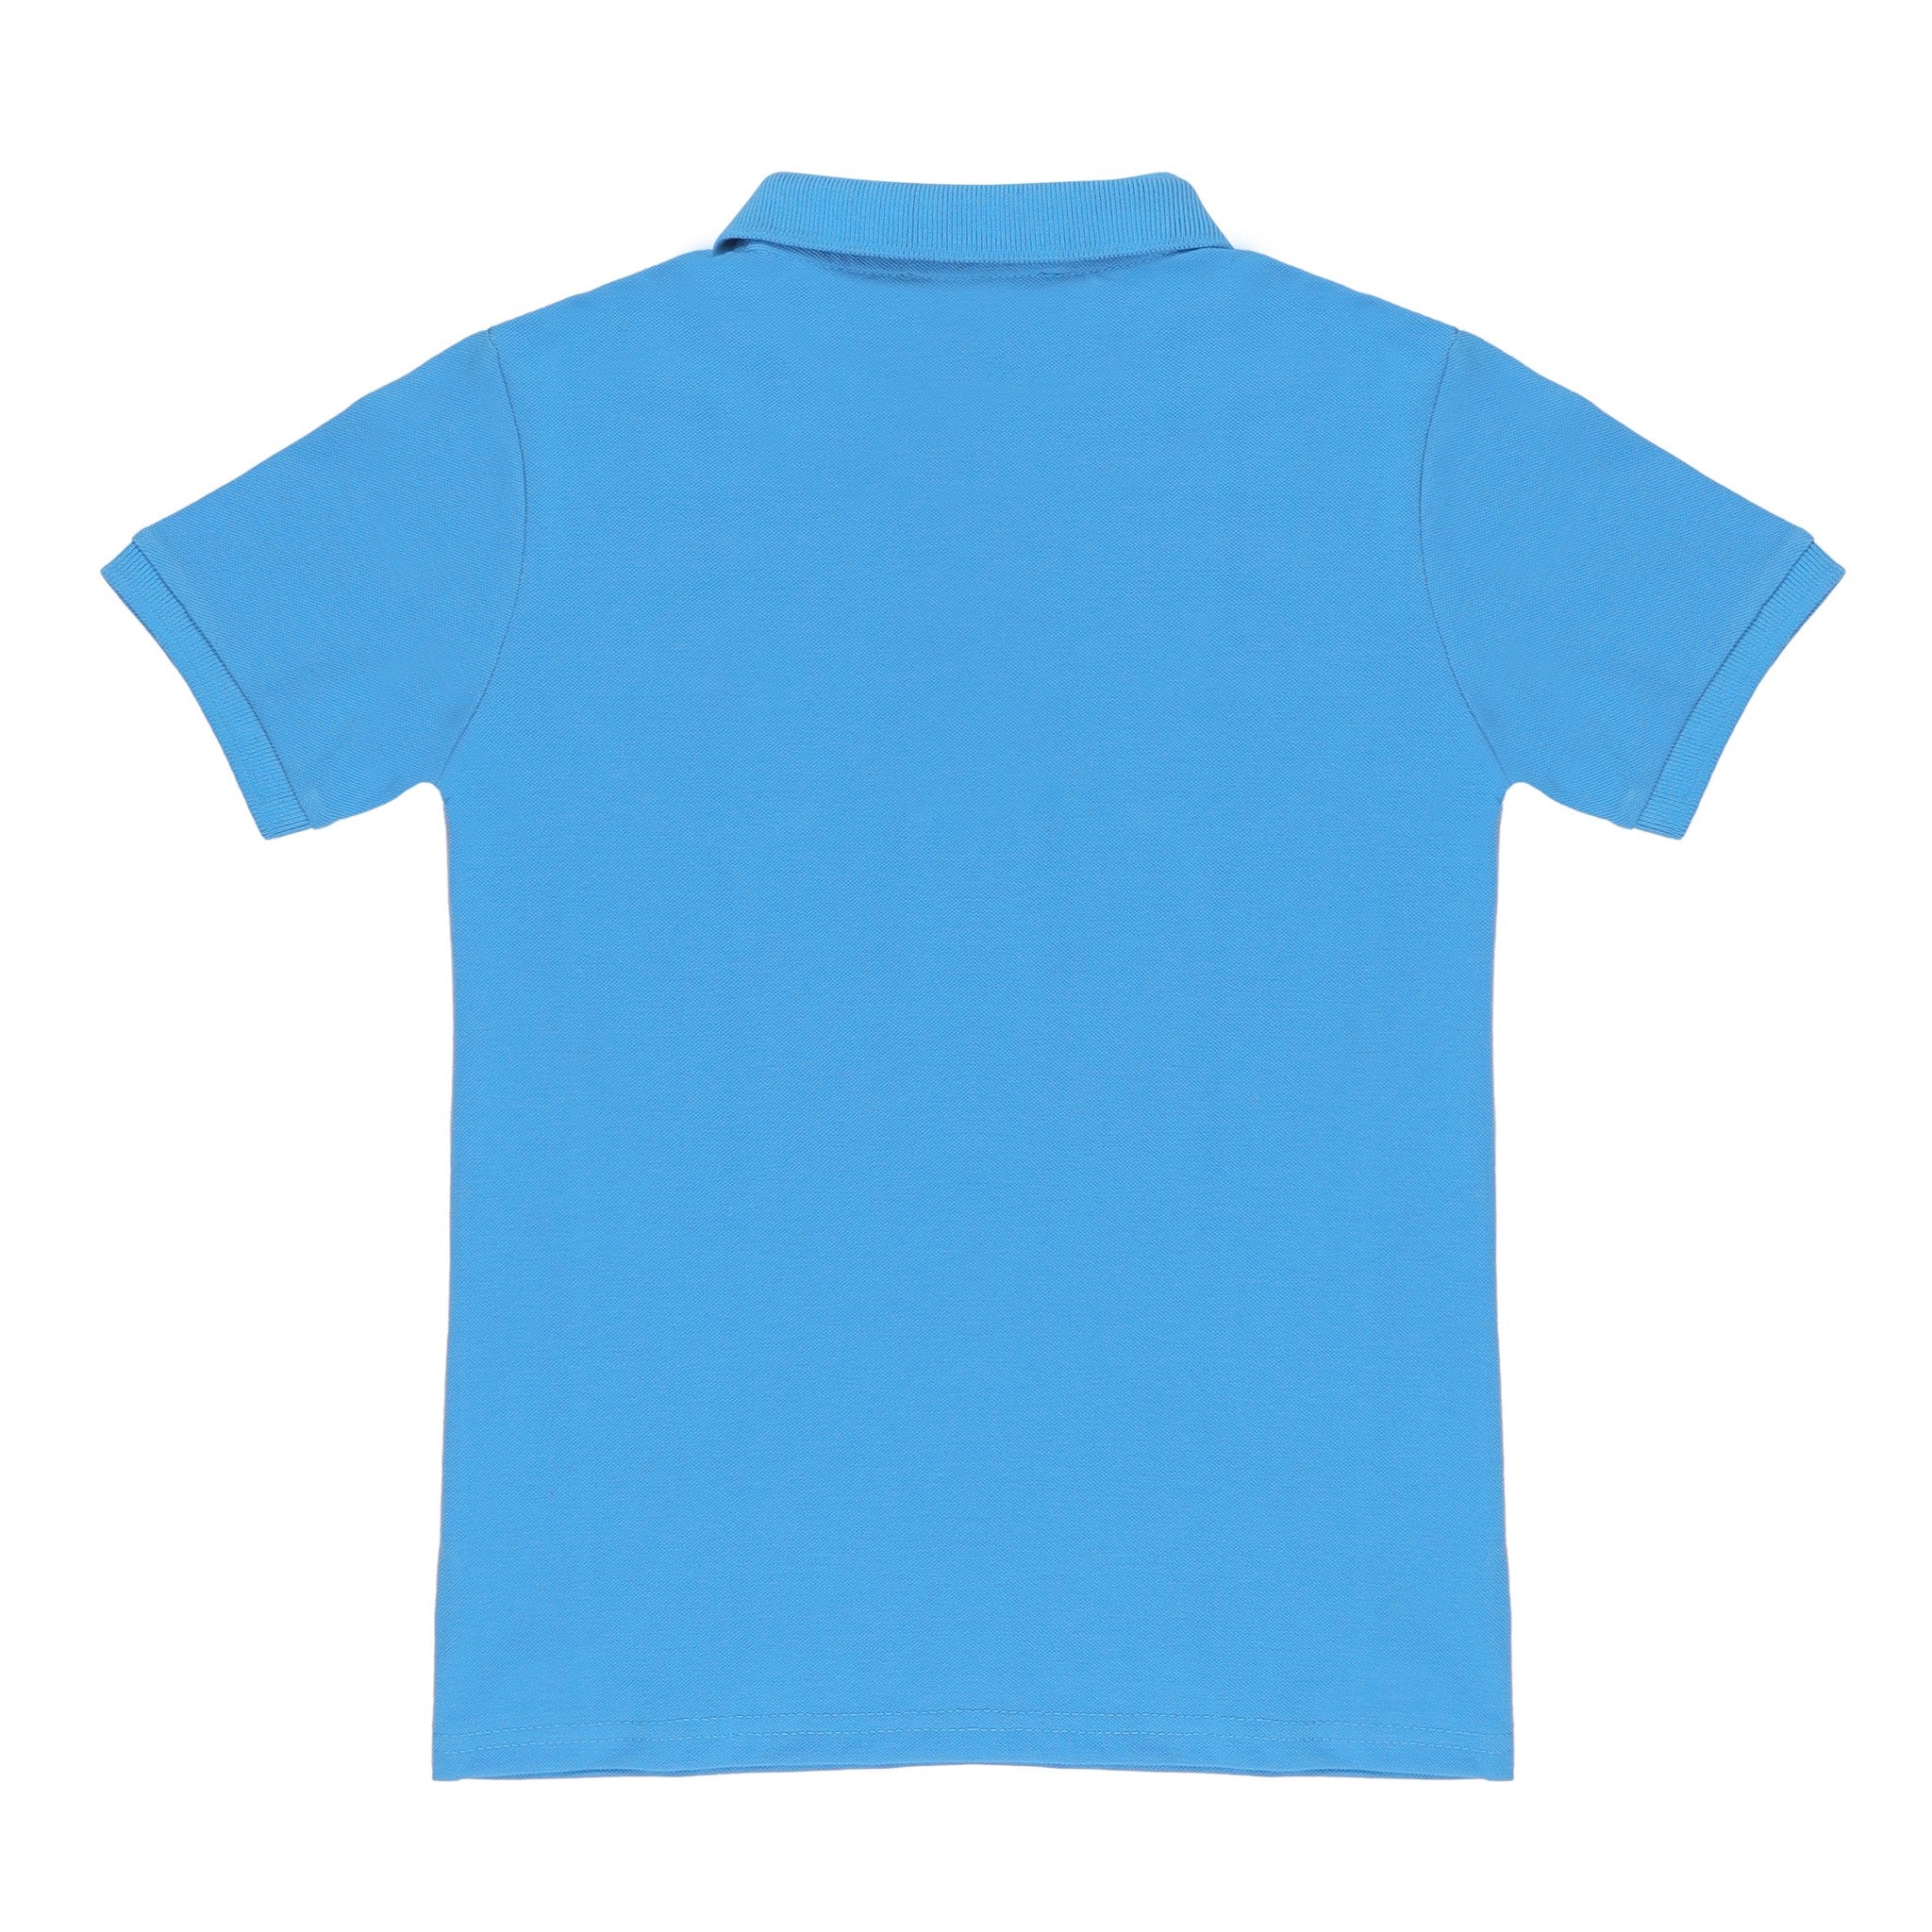 Rfa قميص بولو أزرق